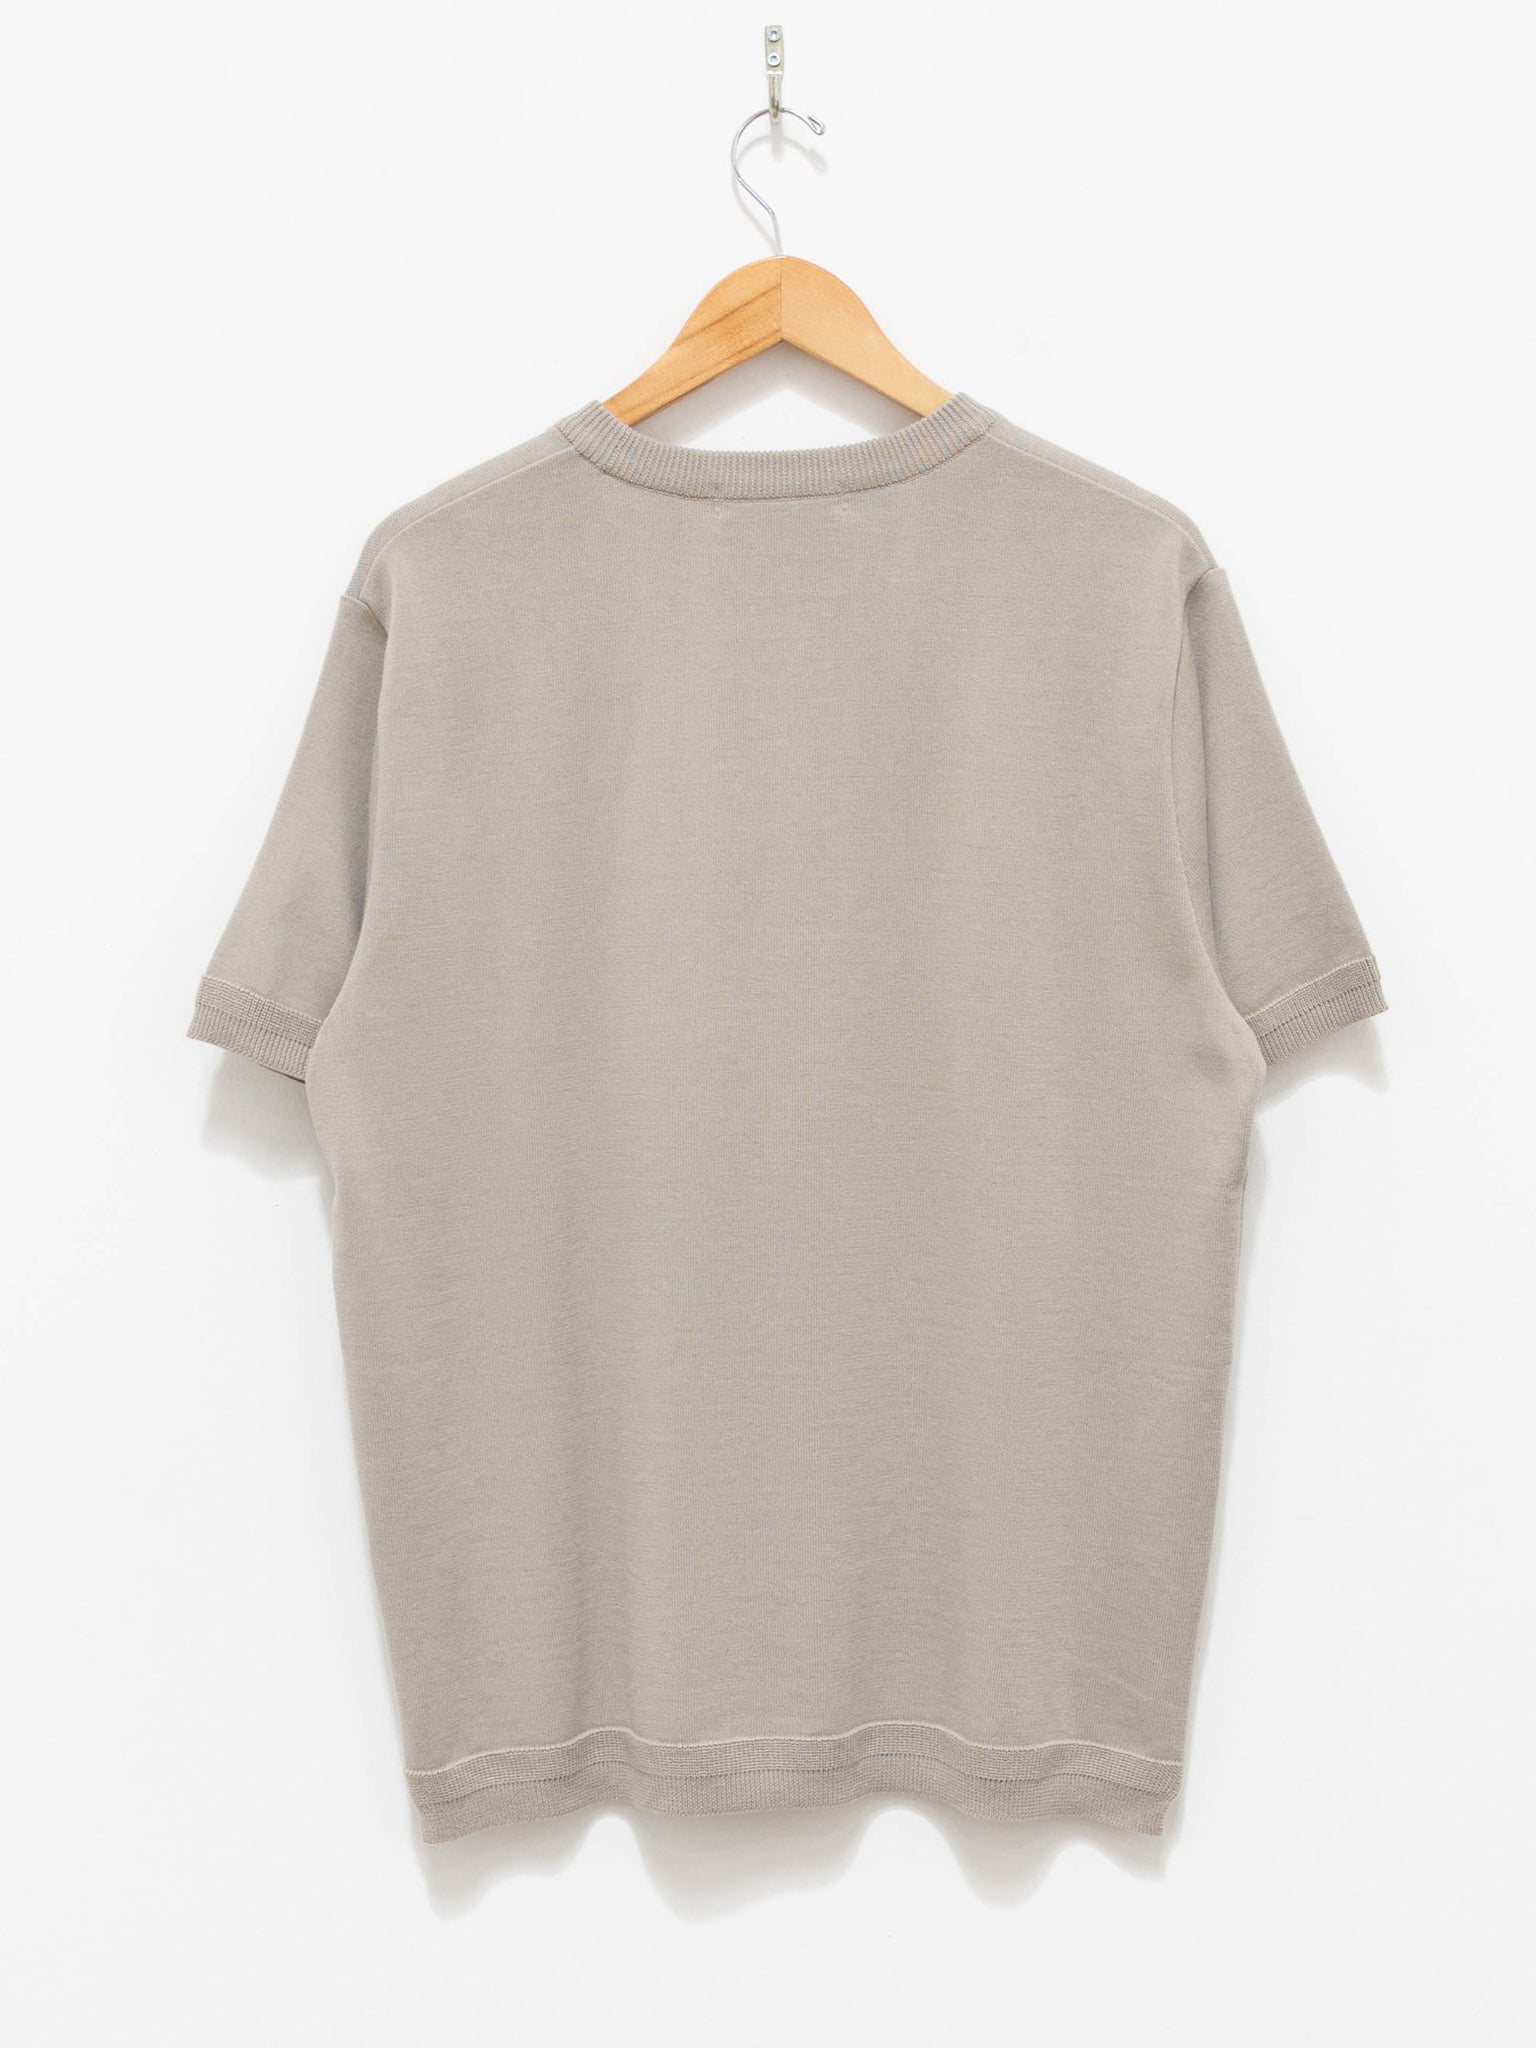 Namu Shop - Fujito Knit T-Shirt - Greige